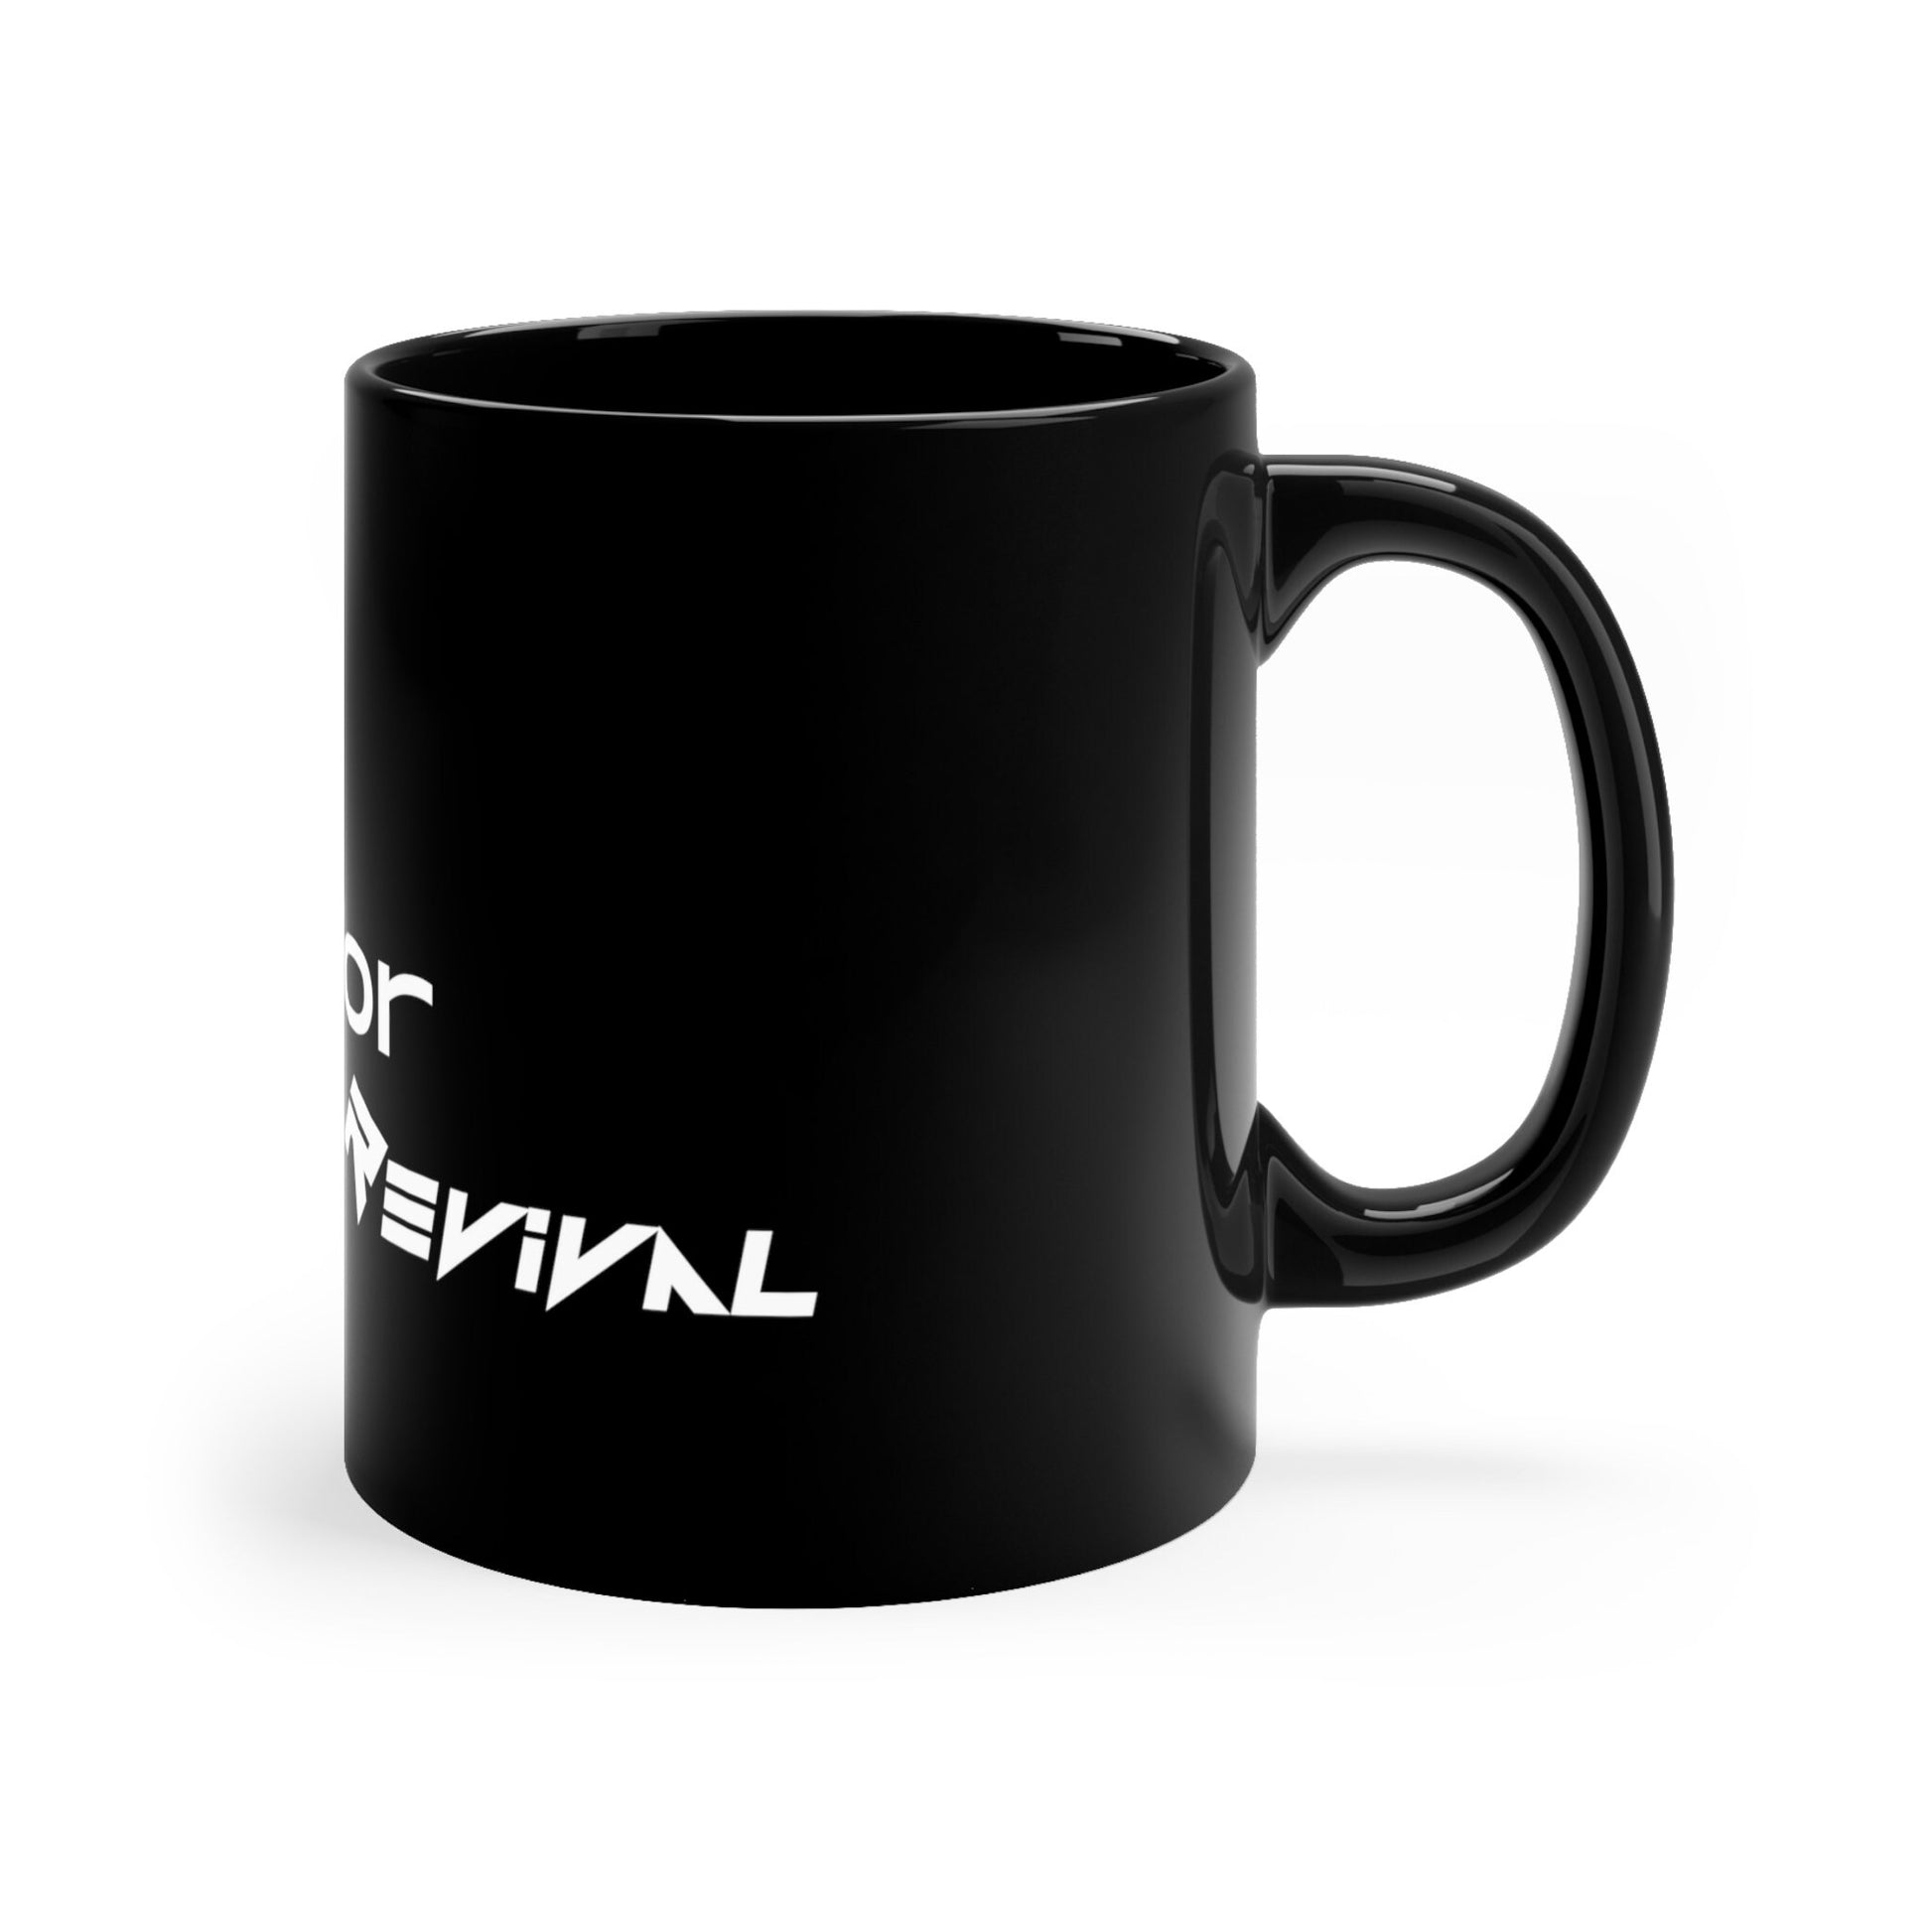 Pray for Revival Mug by Revival 11oz Black Coffee and Mug, Tea cup, Gift for Men, Gift for Women